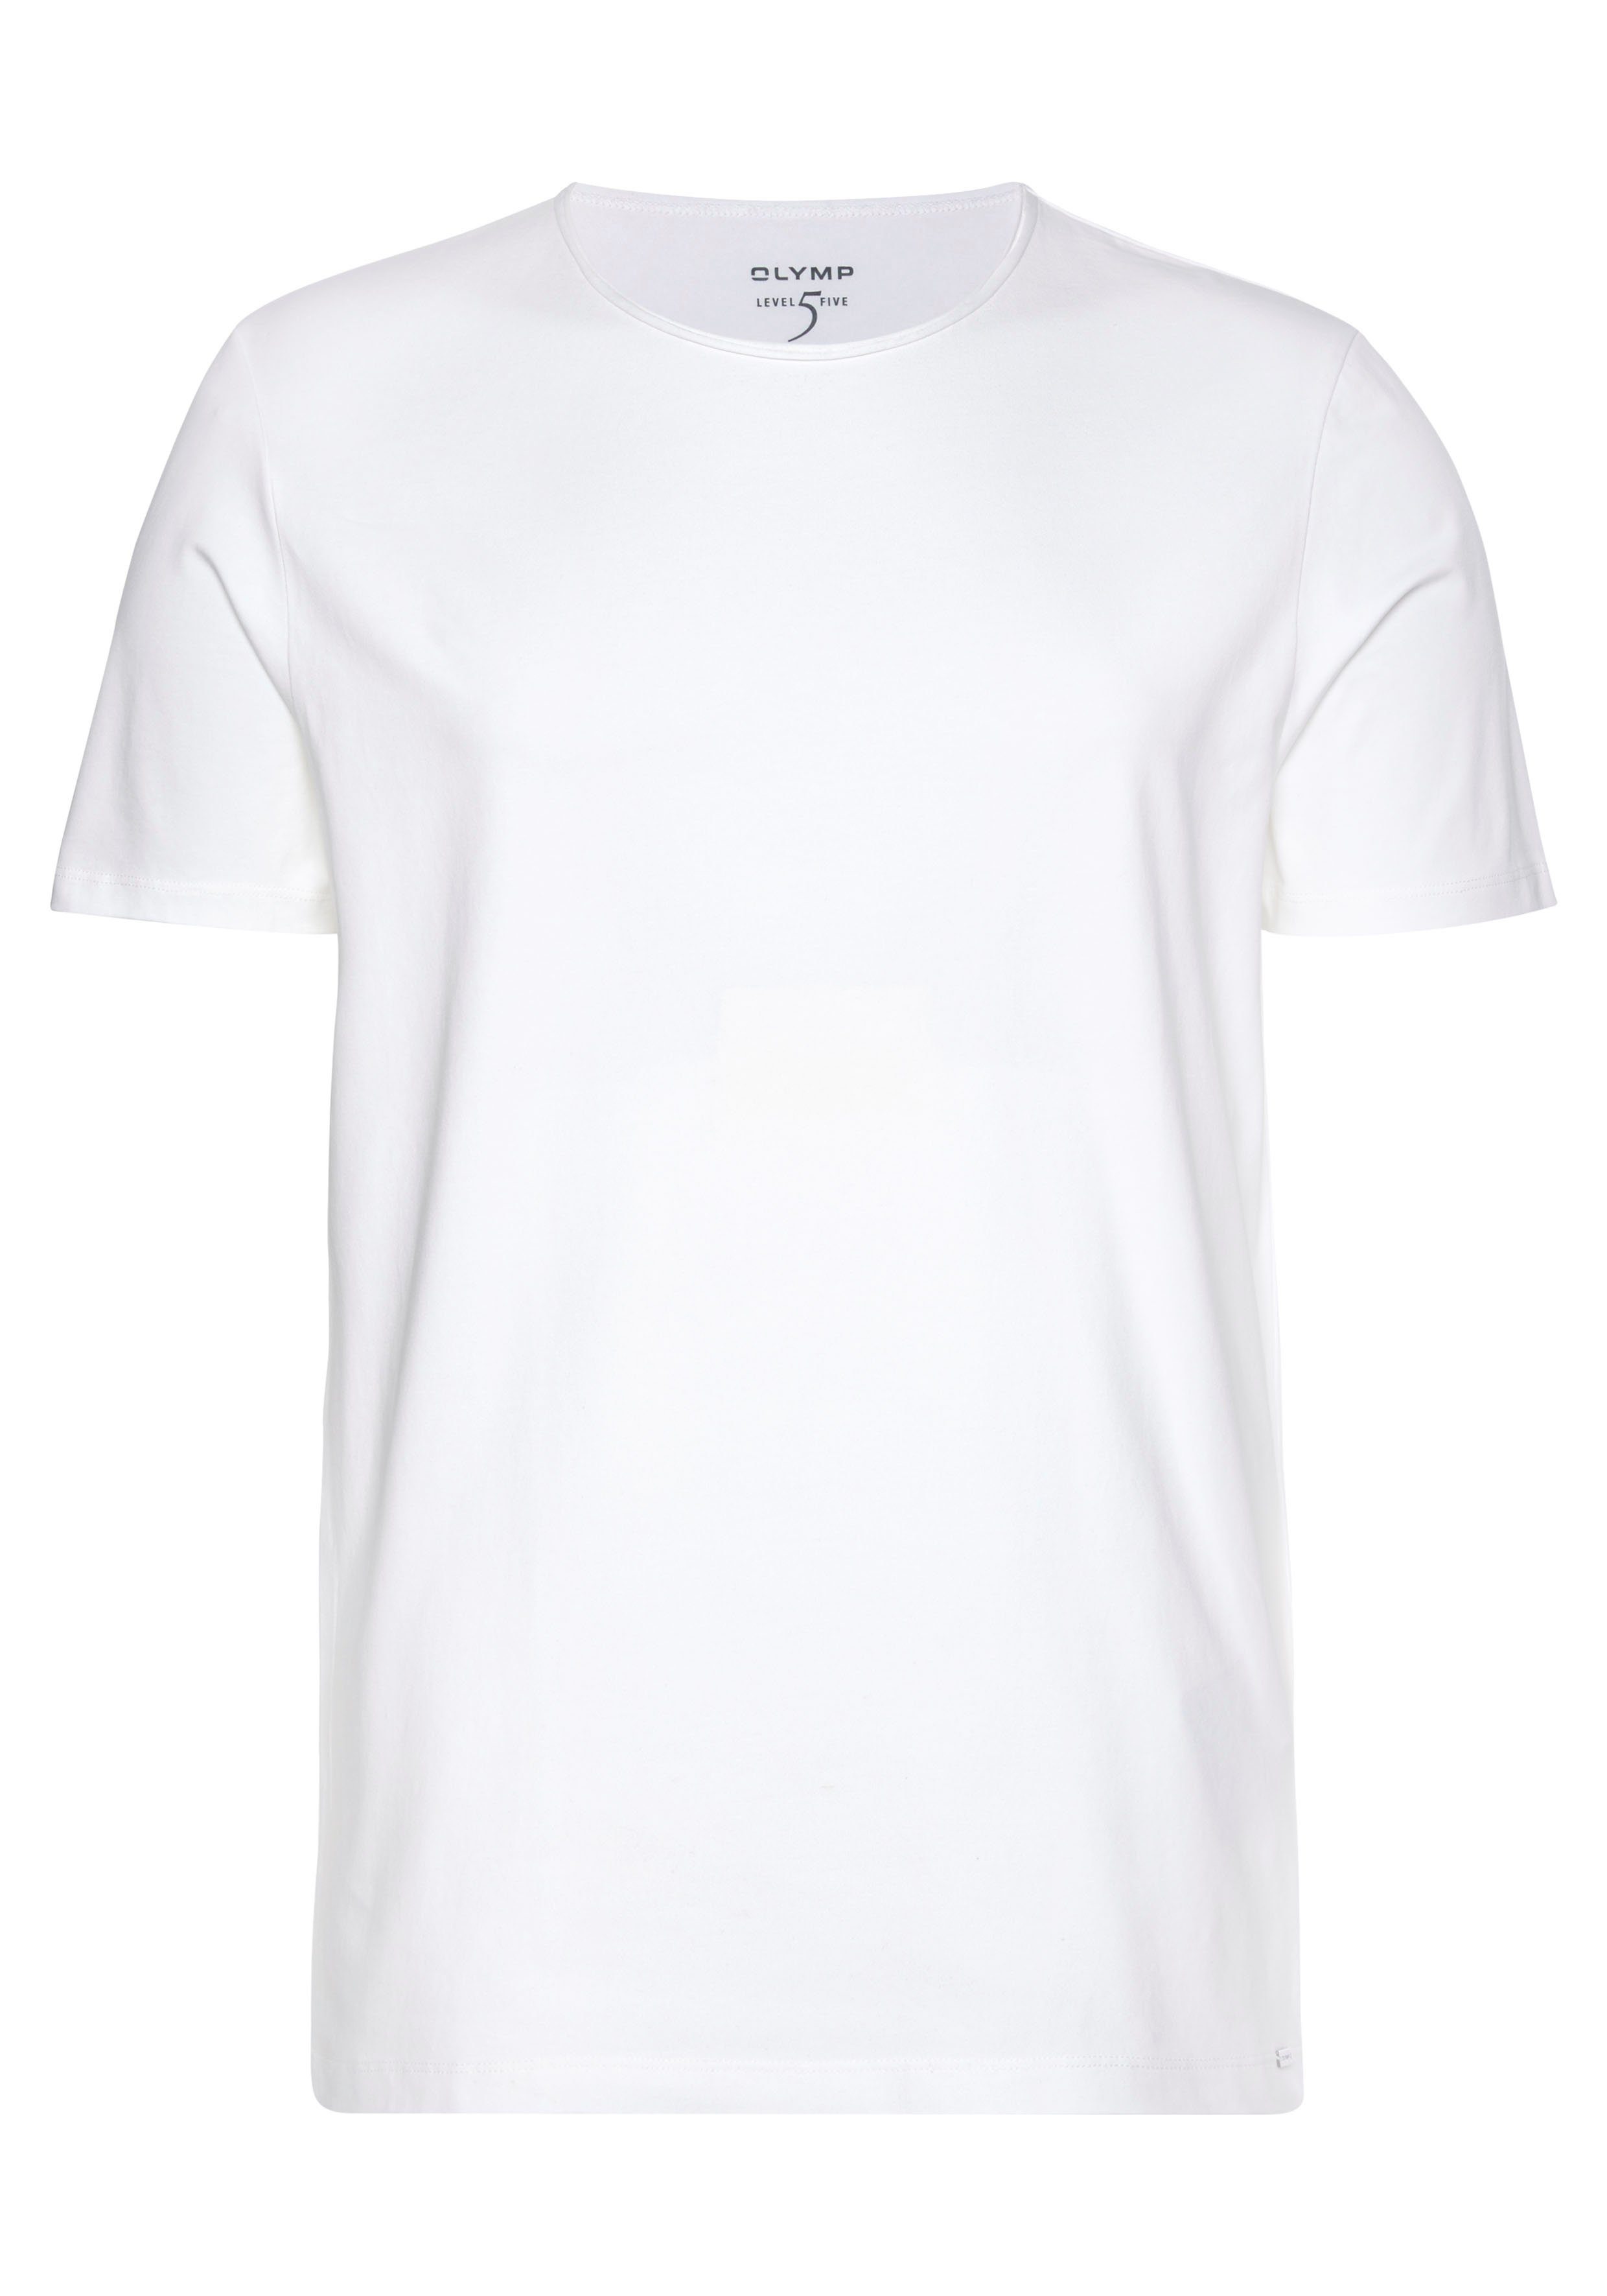 feinem Level Jersey body fit weiß OLYMP T-Shirt aus Five